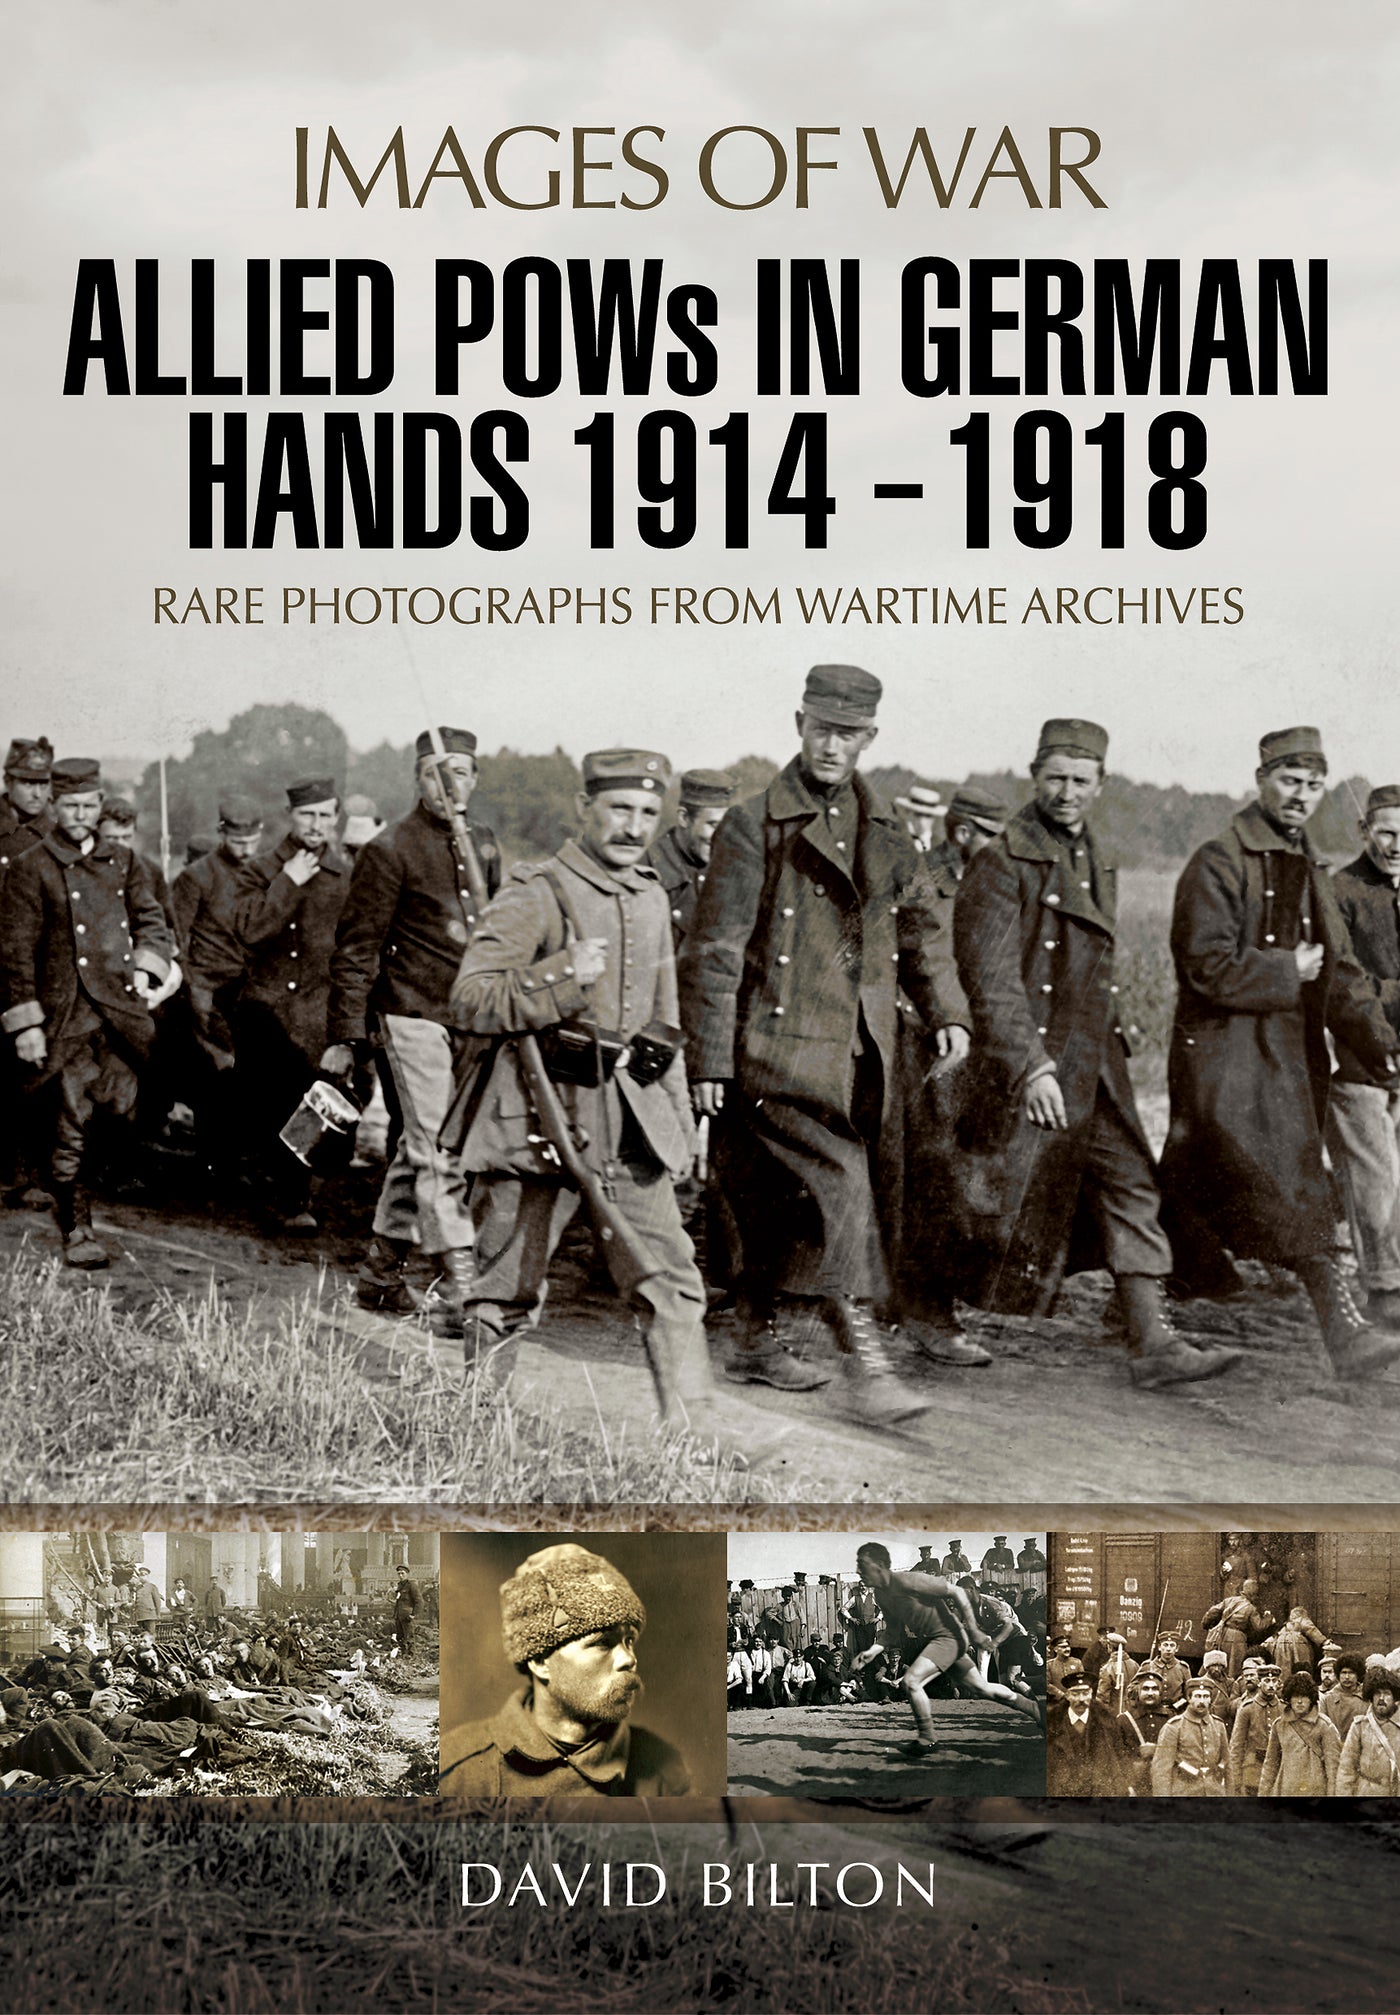 Allied POWs in German Hands 1914 - 1918